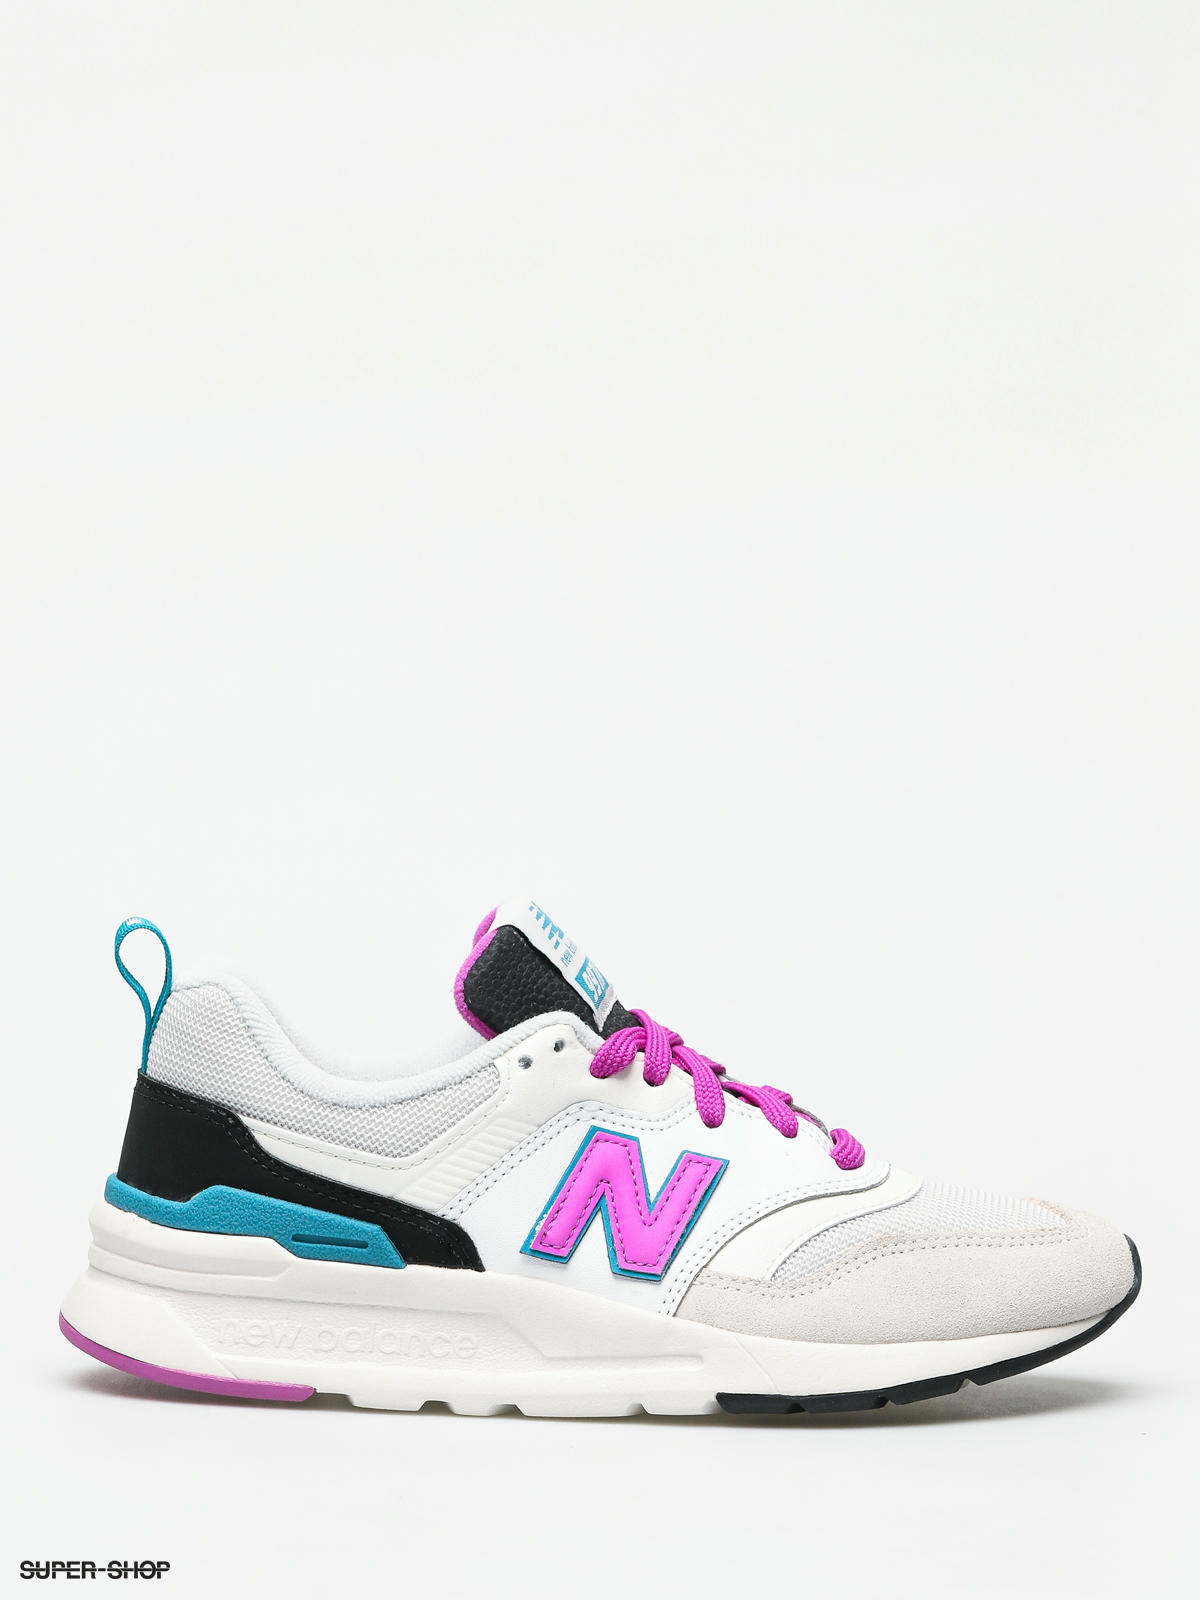 New Balance 997 Shoes Wmn (sea salt)